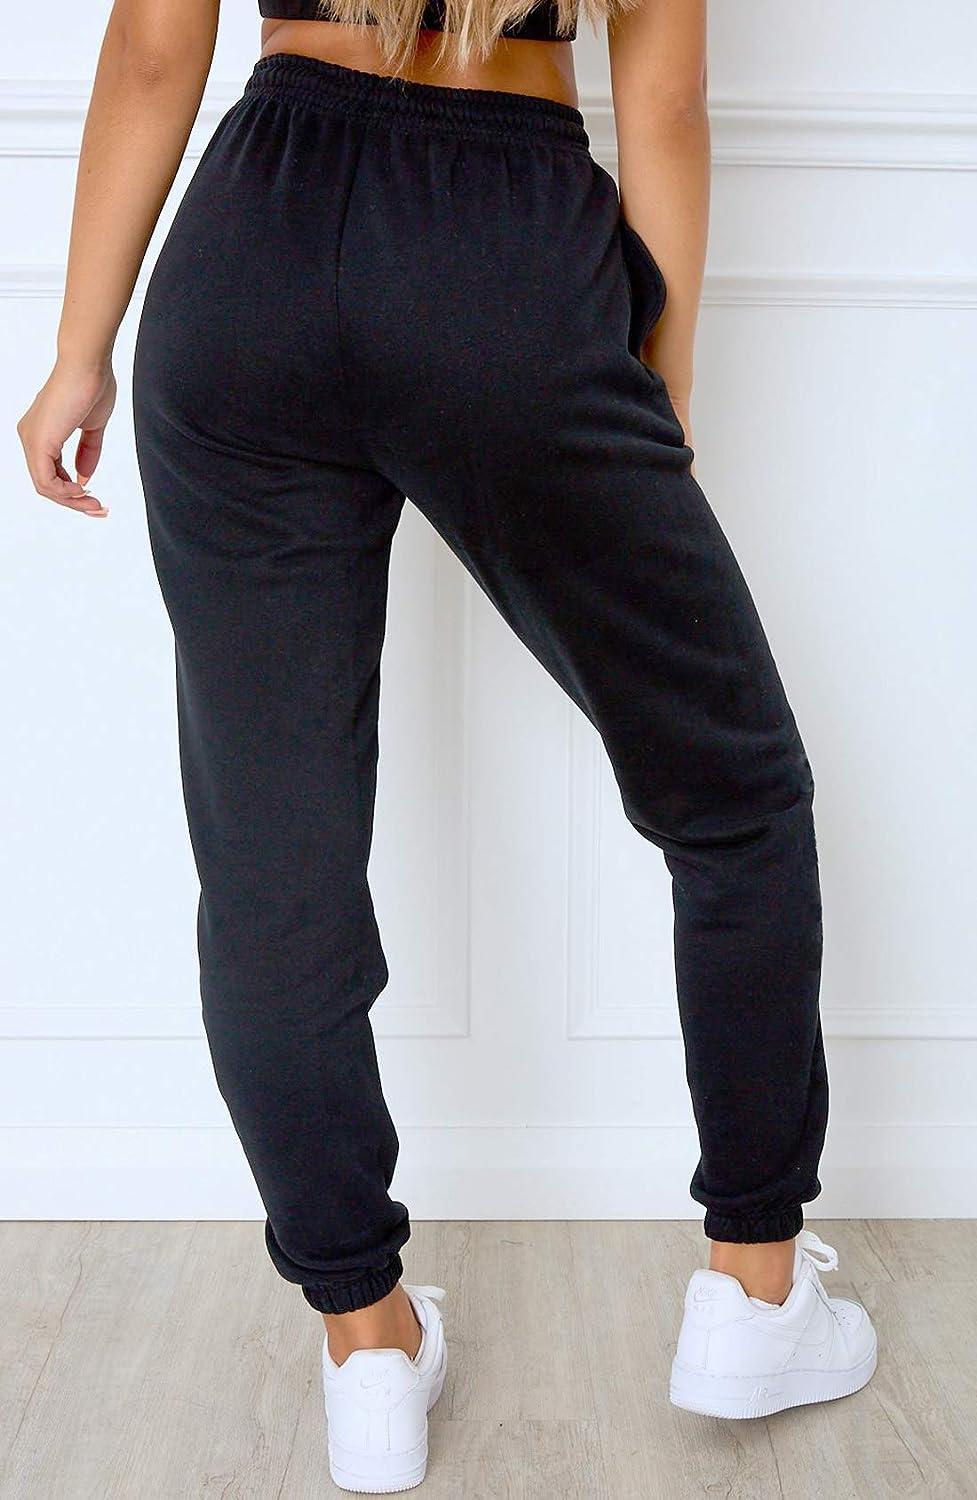  Women High Waisted Sweatpants Yoga Pants Cinch Bottom